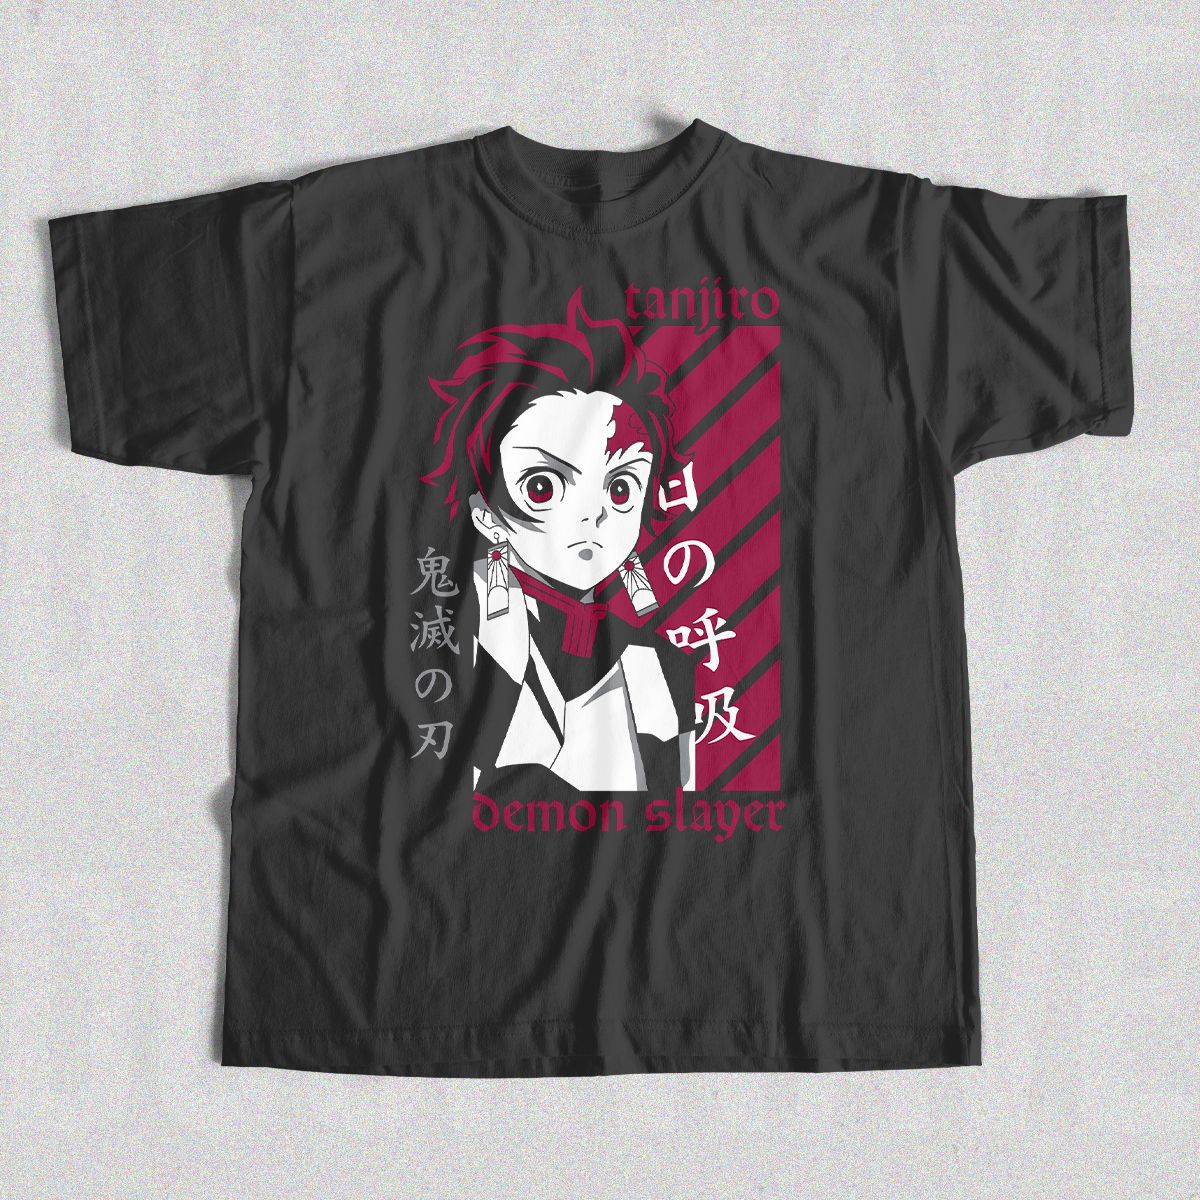 Nome do produto: Camiseta Tanjiro (Demon Slayer)